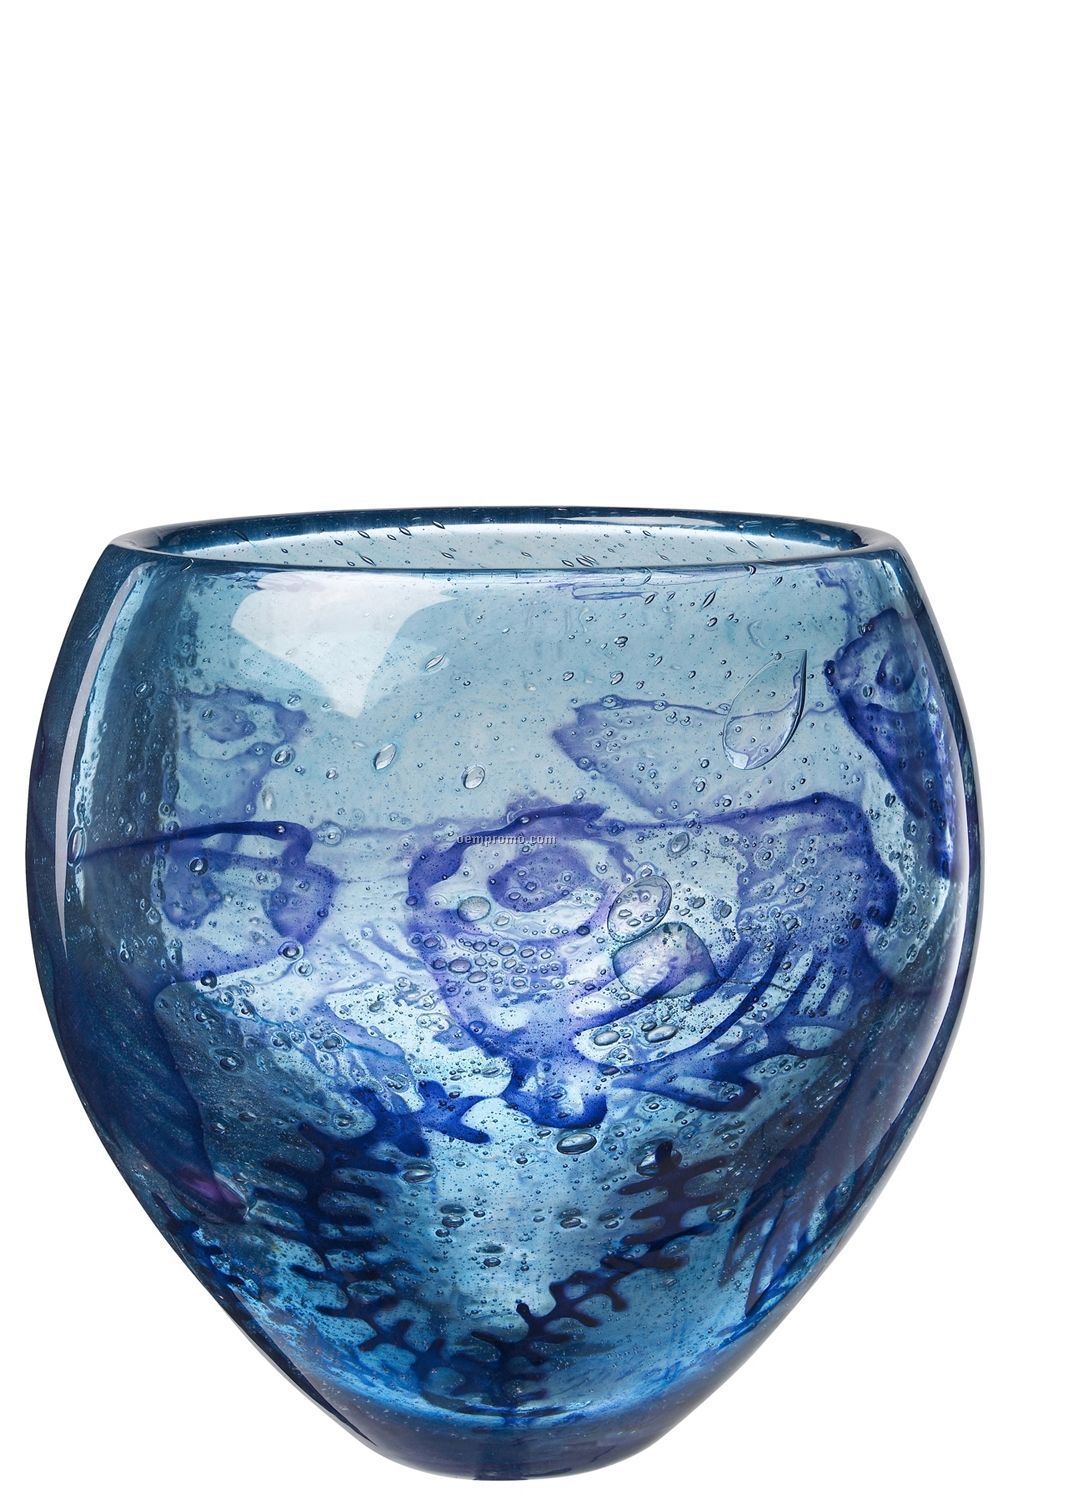 Underworld Blue Glass Vase W/ Fish Motif By Olle Brozen